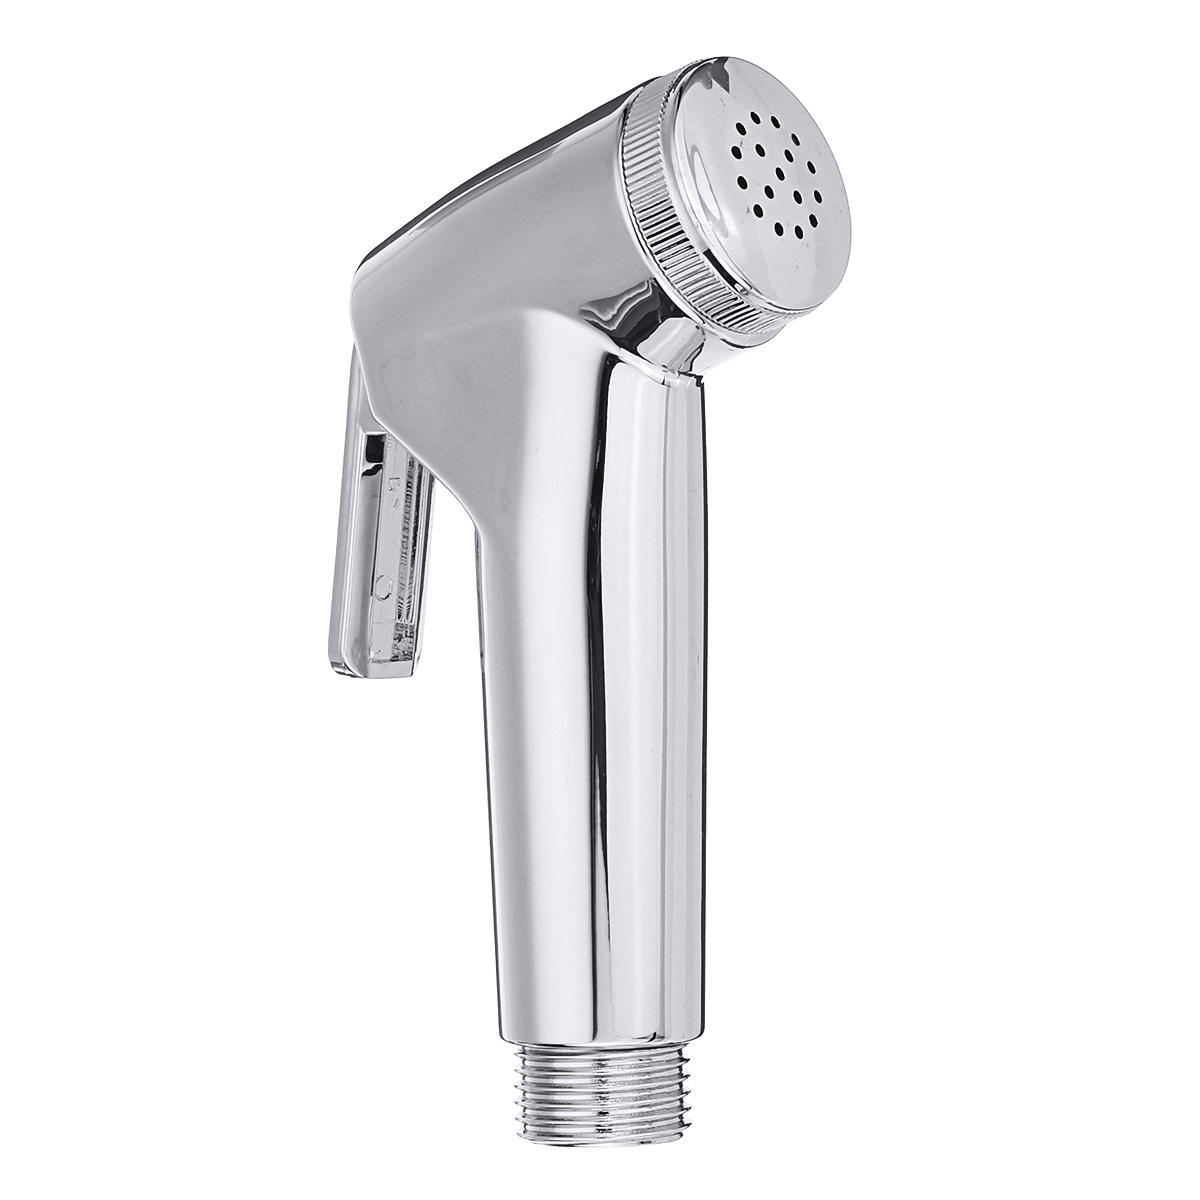 

ABS Handheld Bathroom Bidet Portable Toilet Bidet Spray Shower Head Water Nozzle Sprayer Cloth Diaper Sprayer for Person